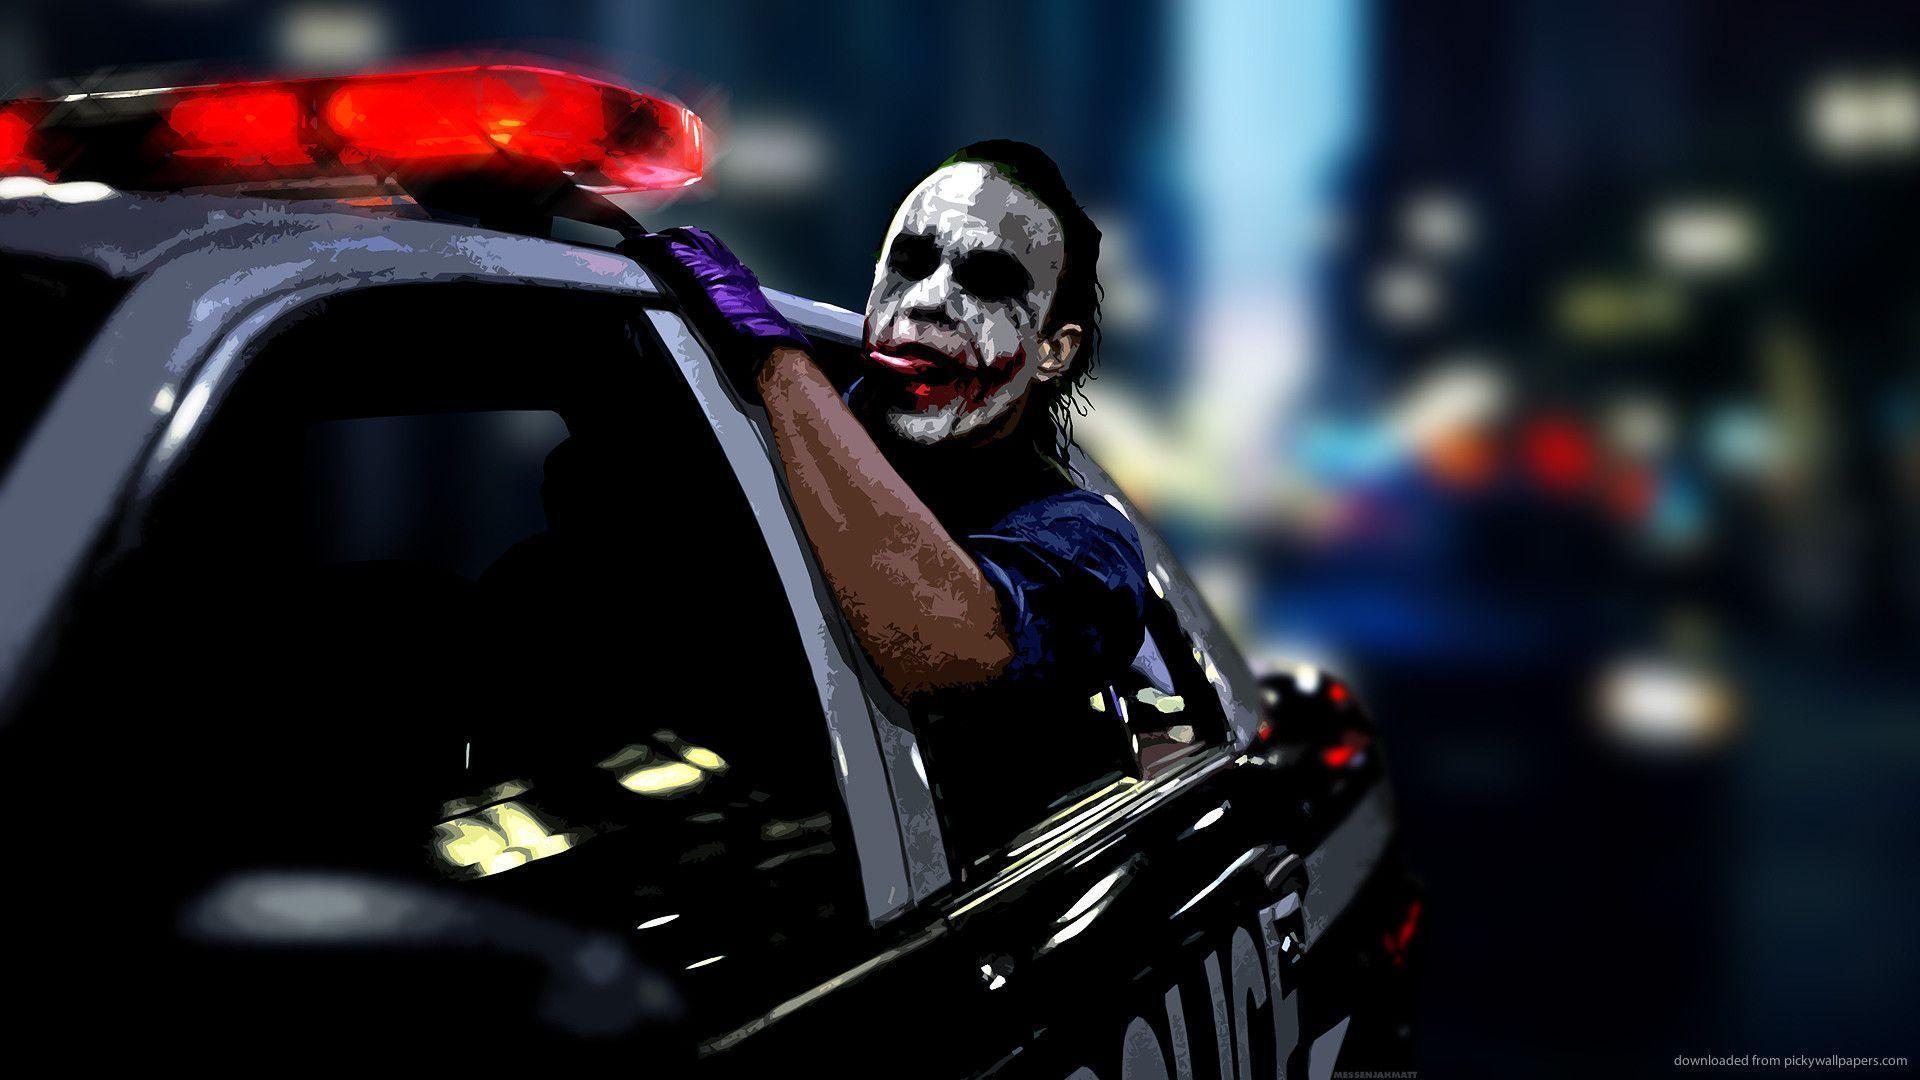 Download 1920x1080 Joker Driving In A Police Car Wallpaper